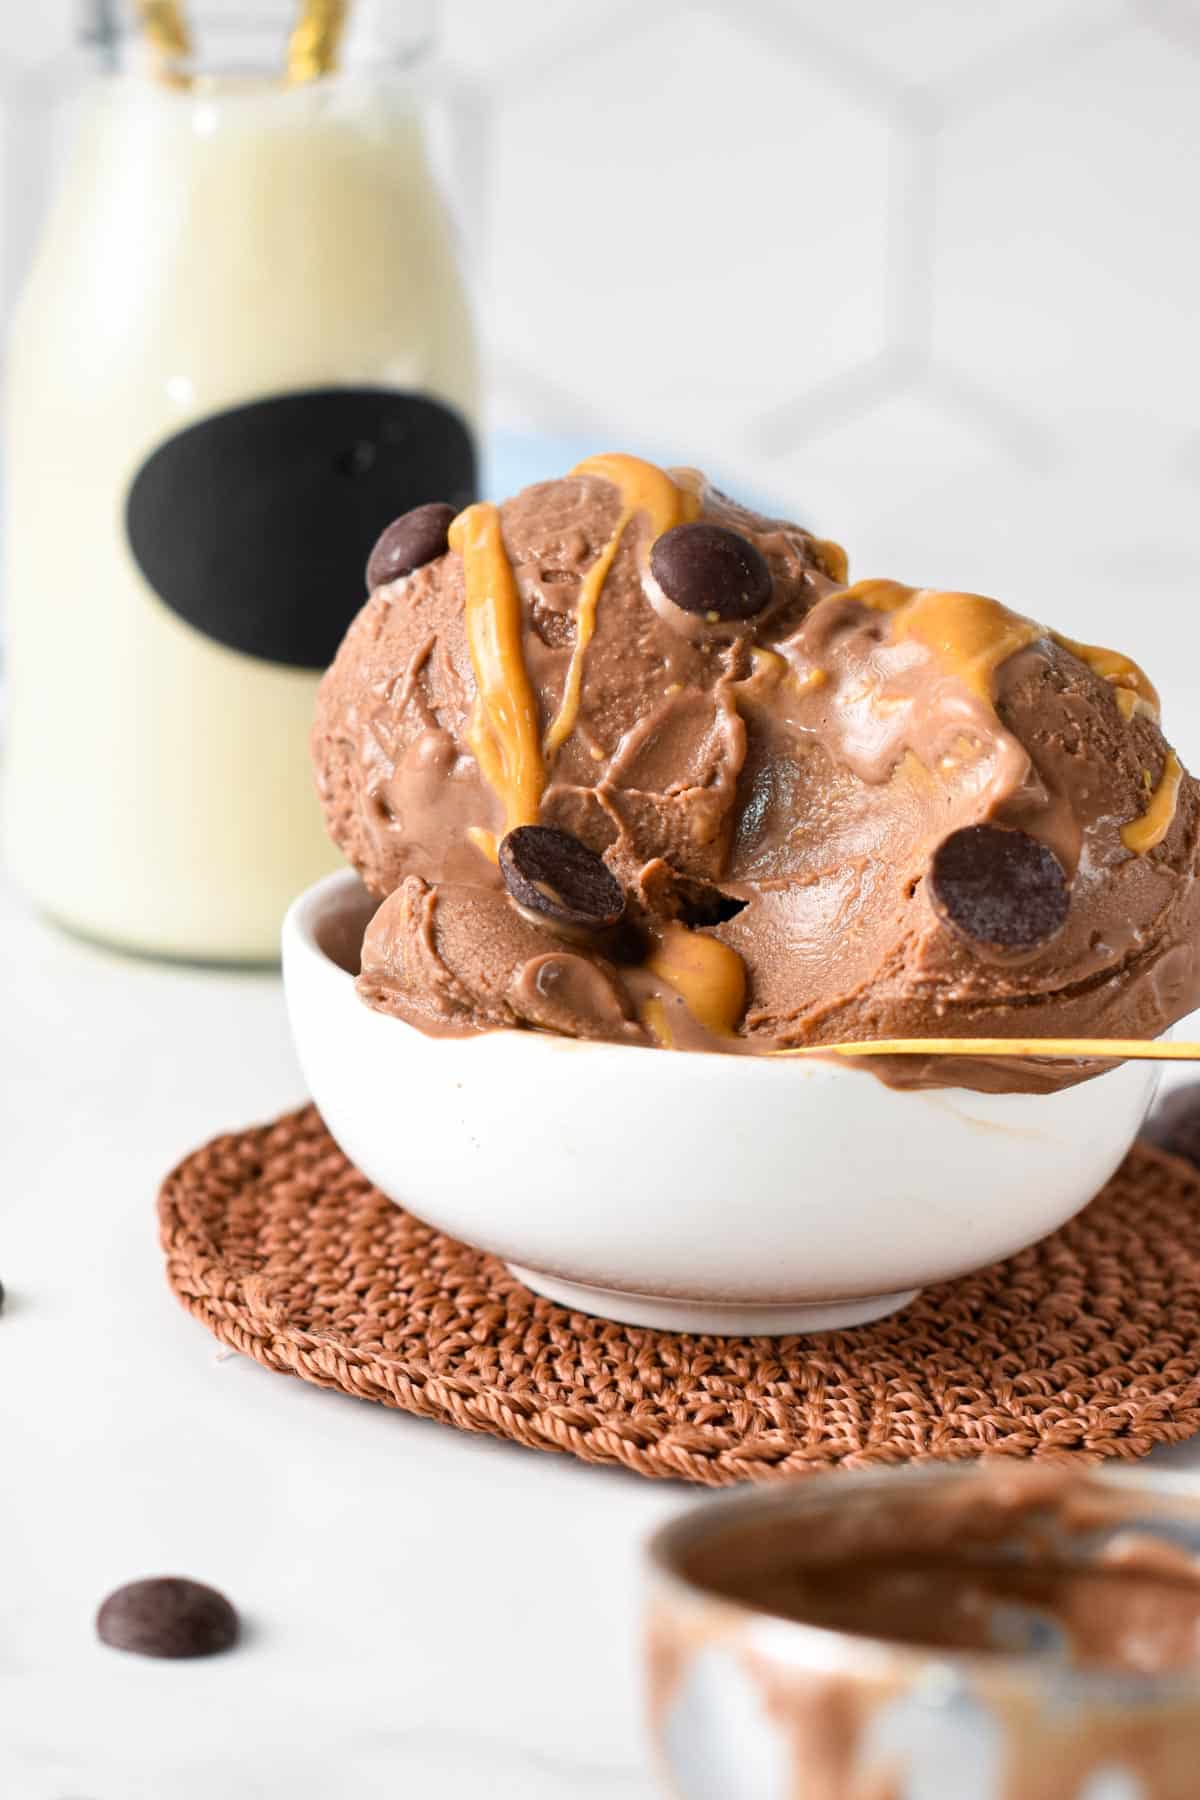 Ninja Creami Protein Ice Cream - I Dream of Ice Cream